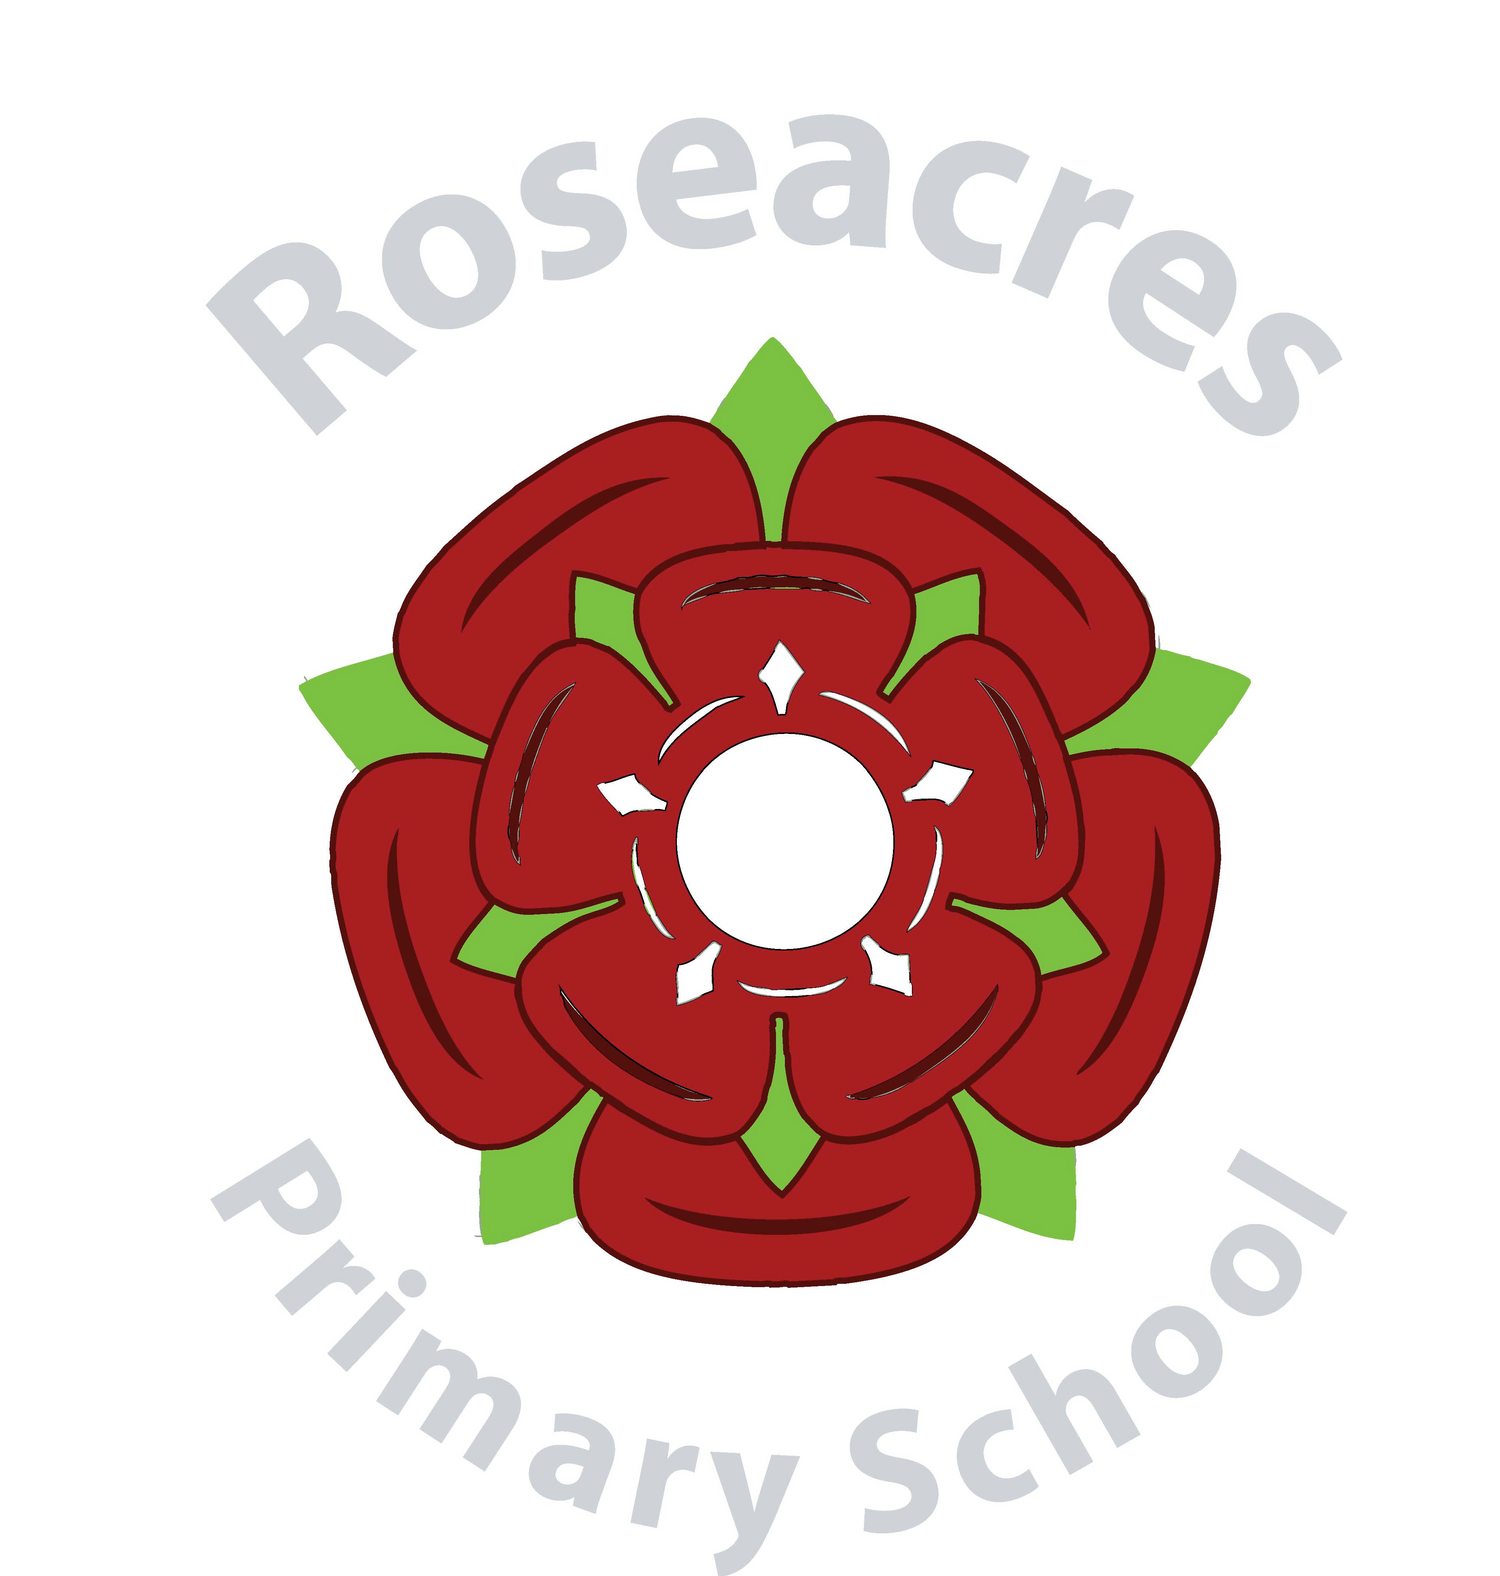 Roseacres Primary School